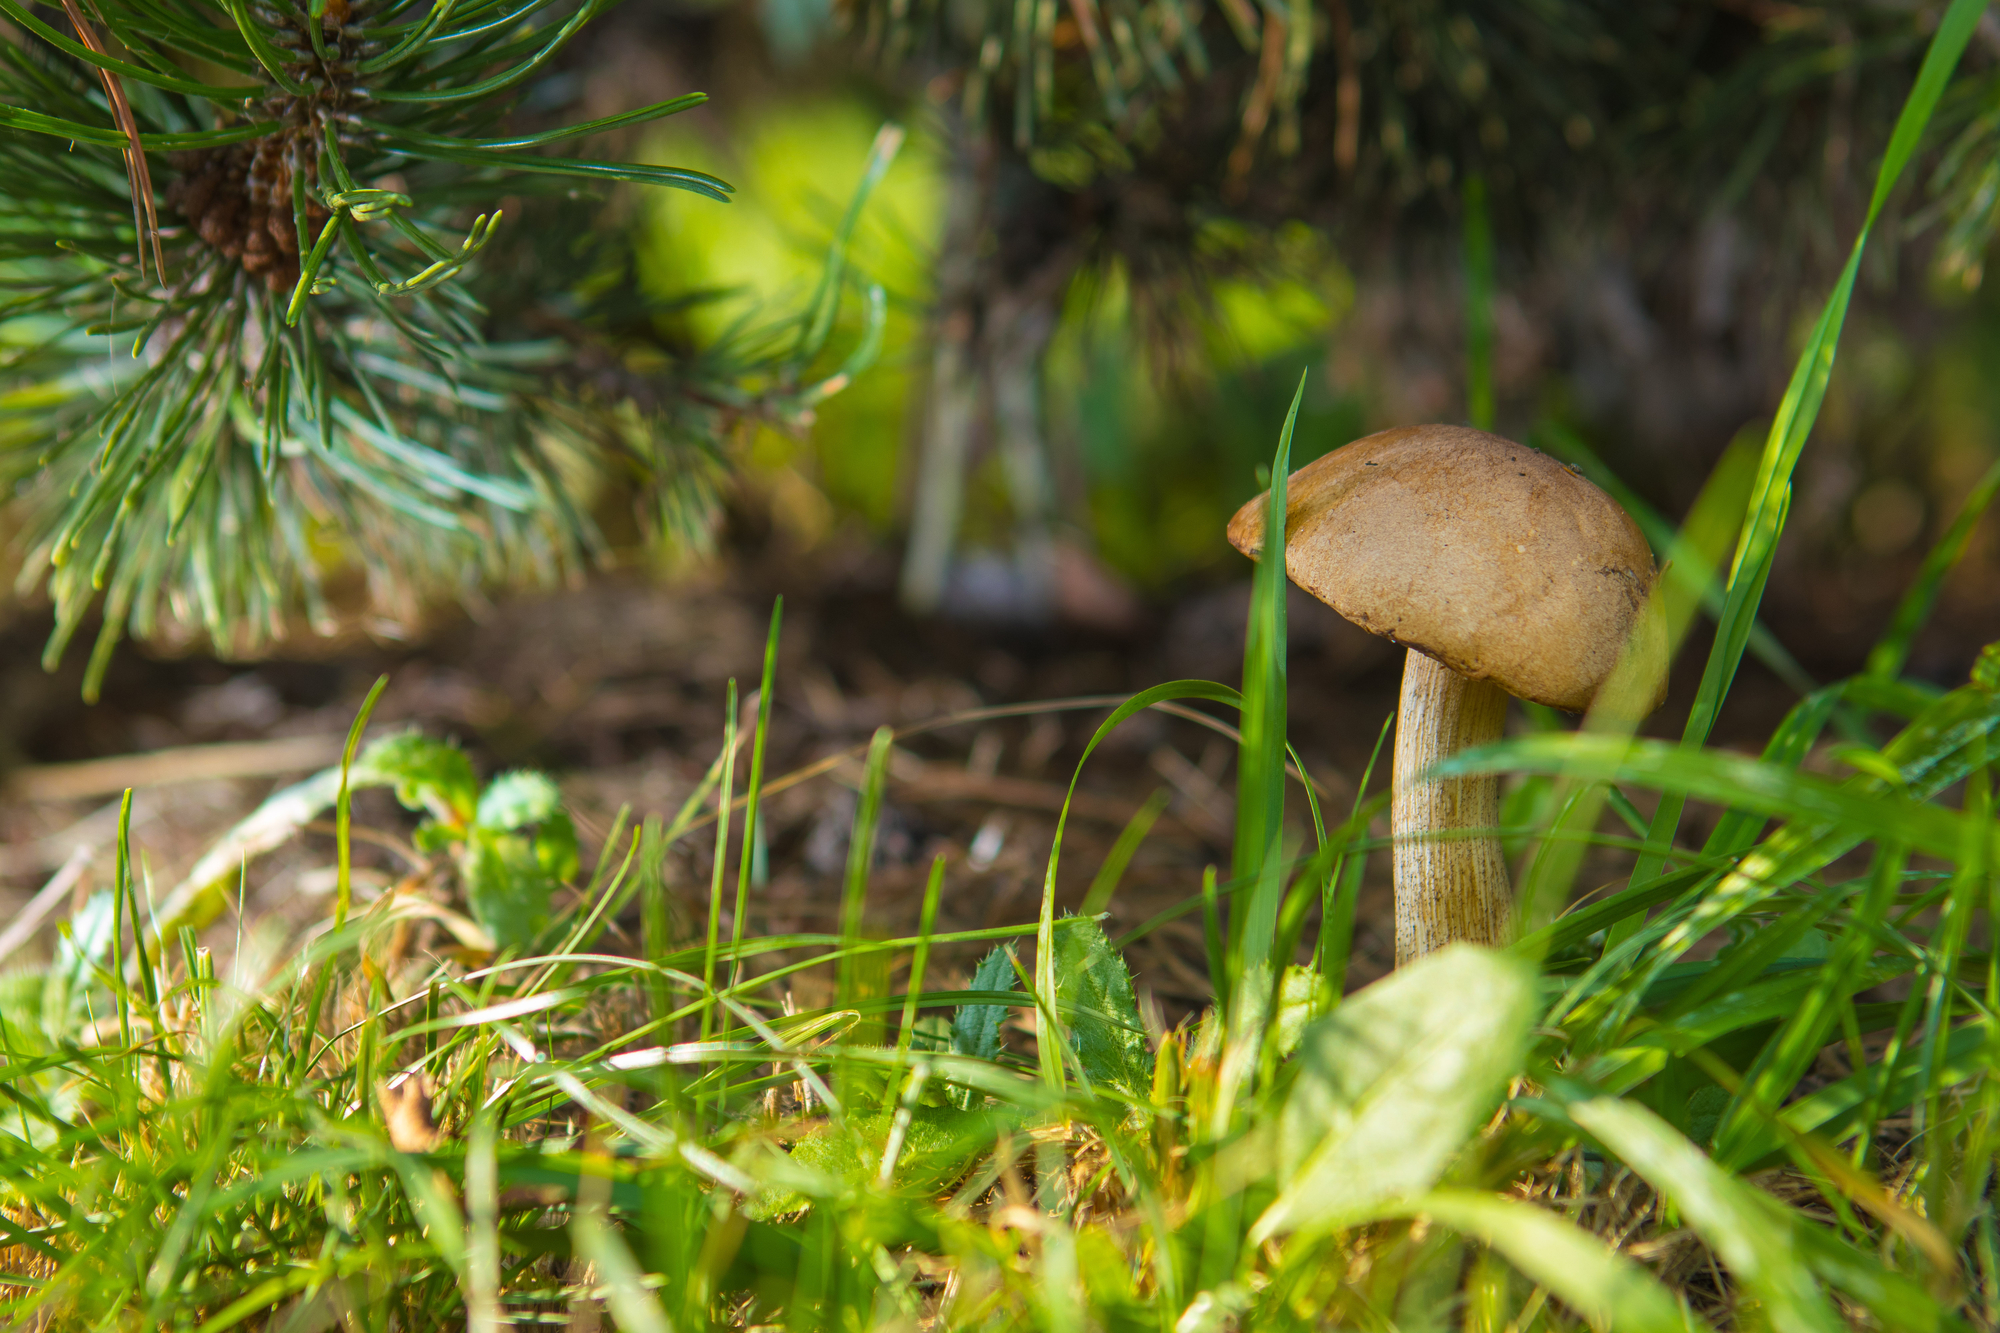 Forest mushroom in green grass